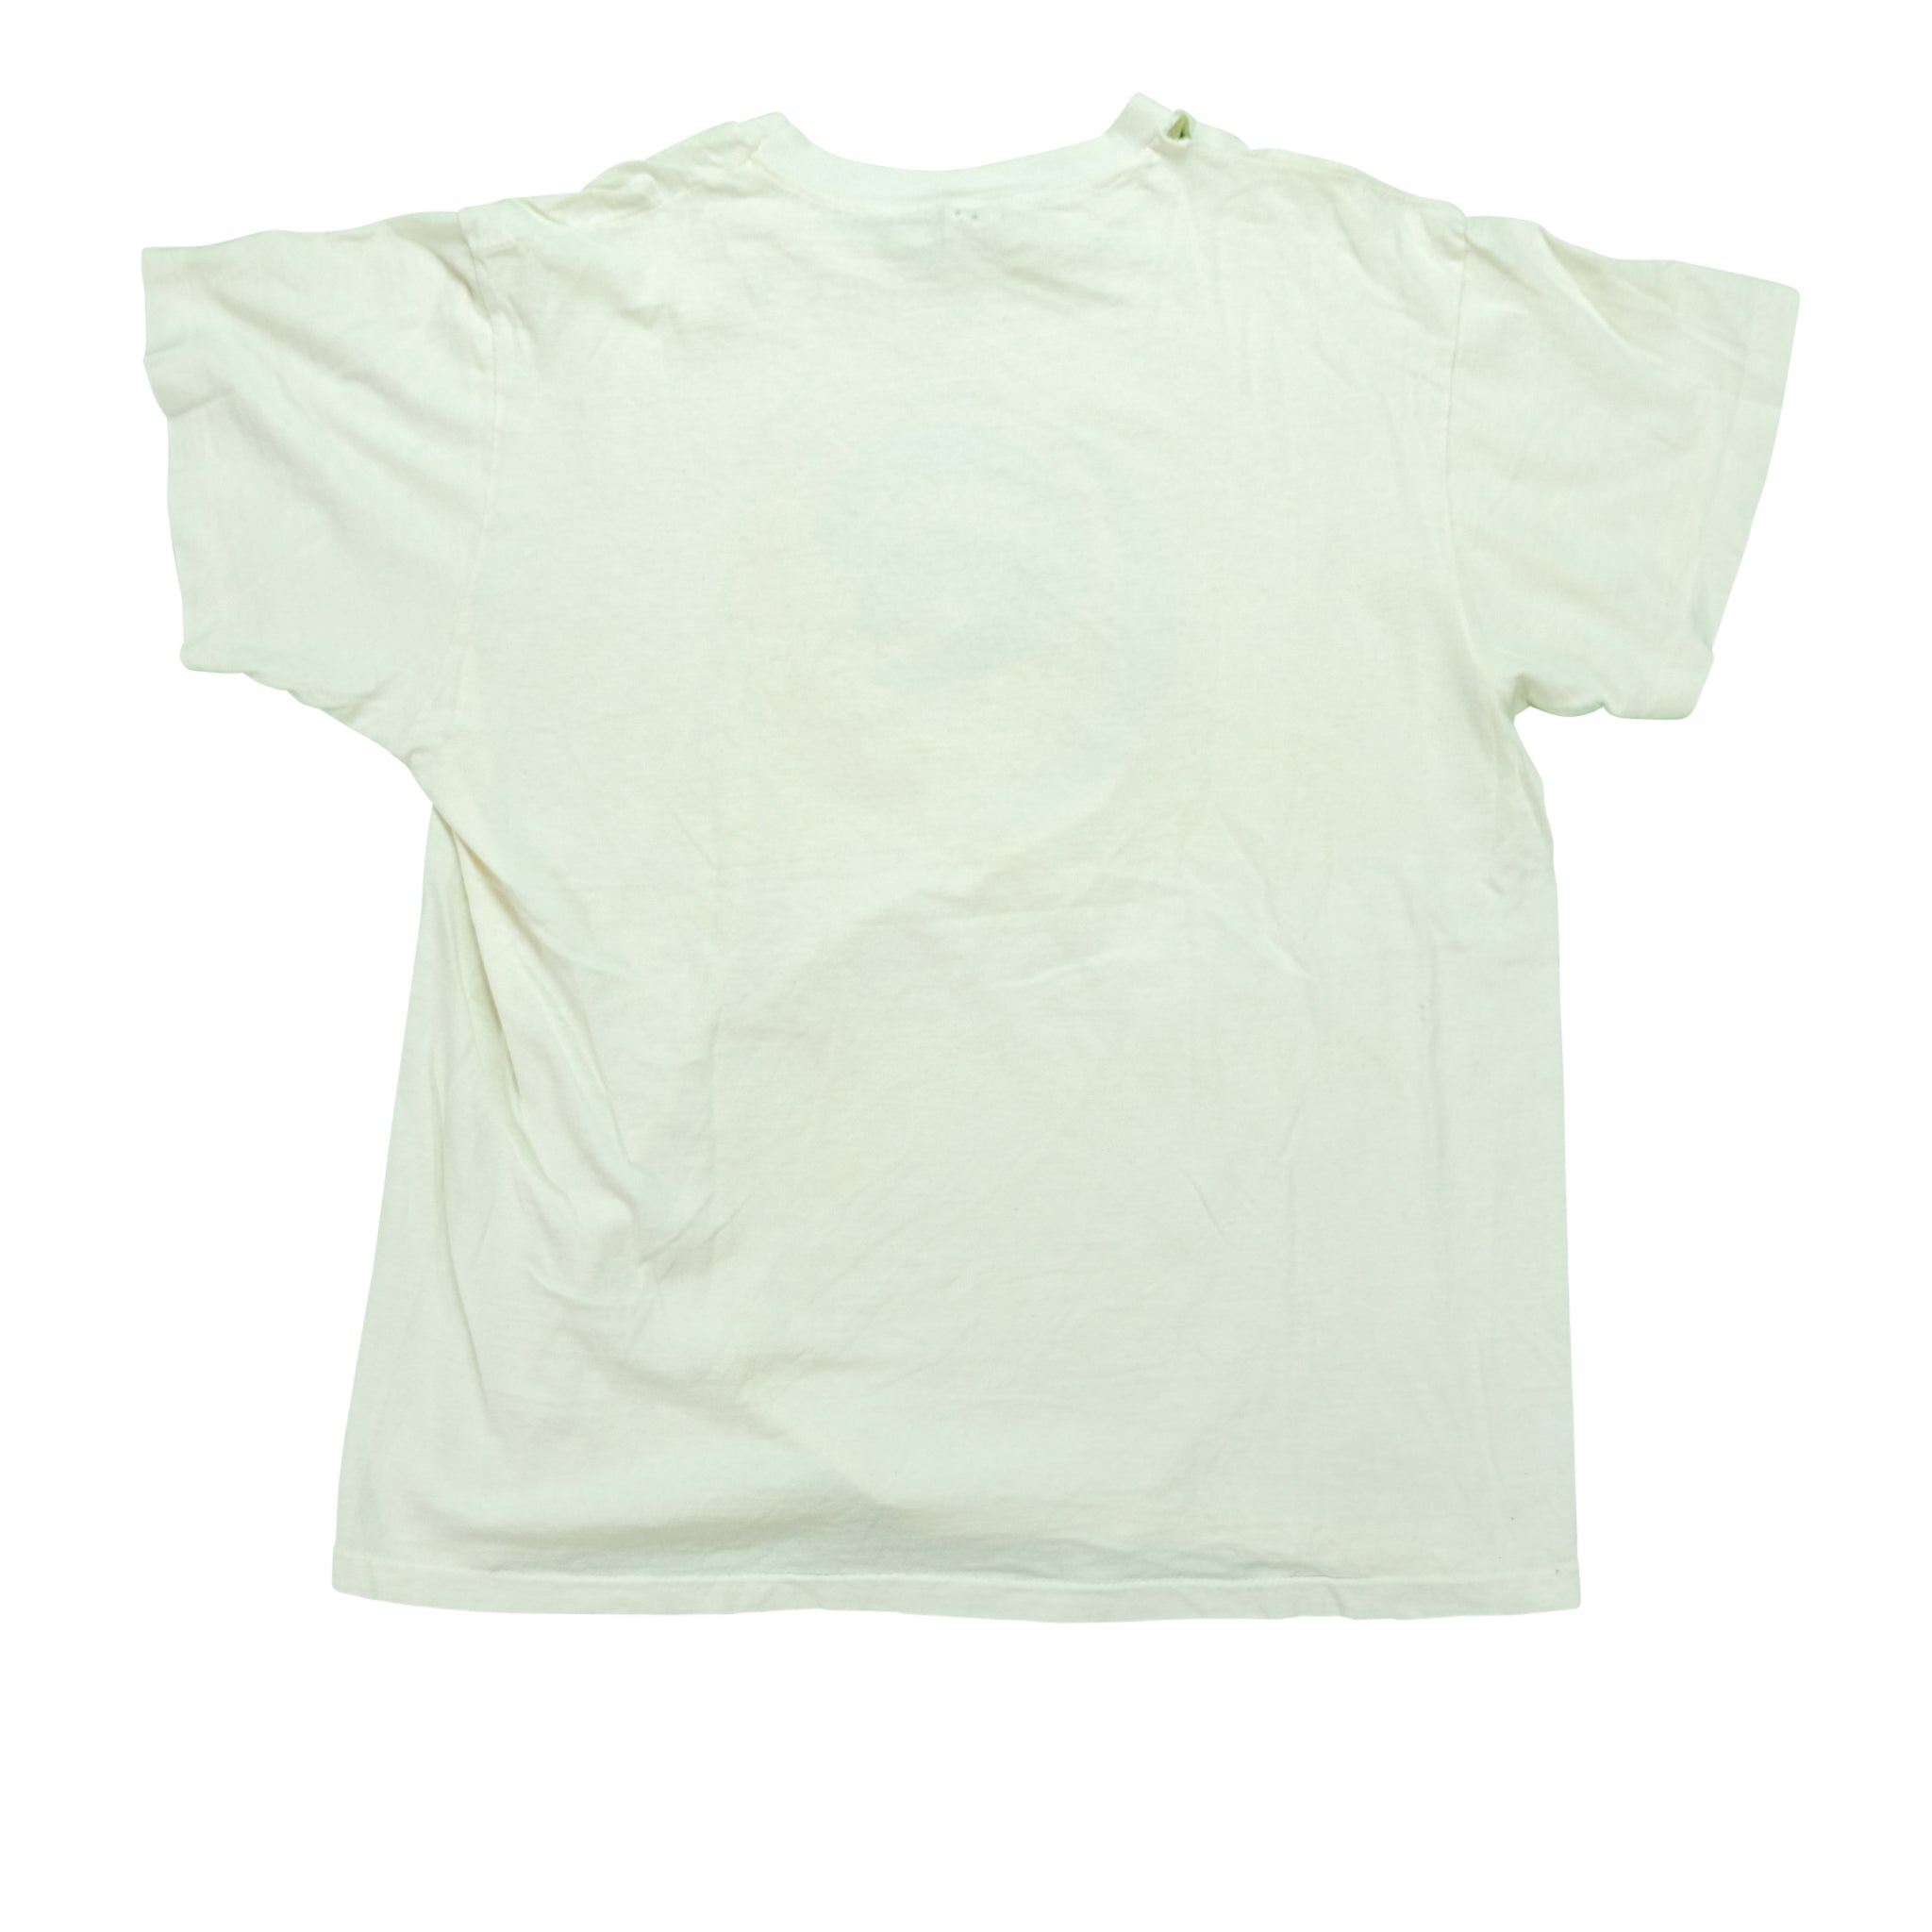 Nfl New York Giants Grateful Dead Hawaiian Shirt - Shibtee Clothing